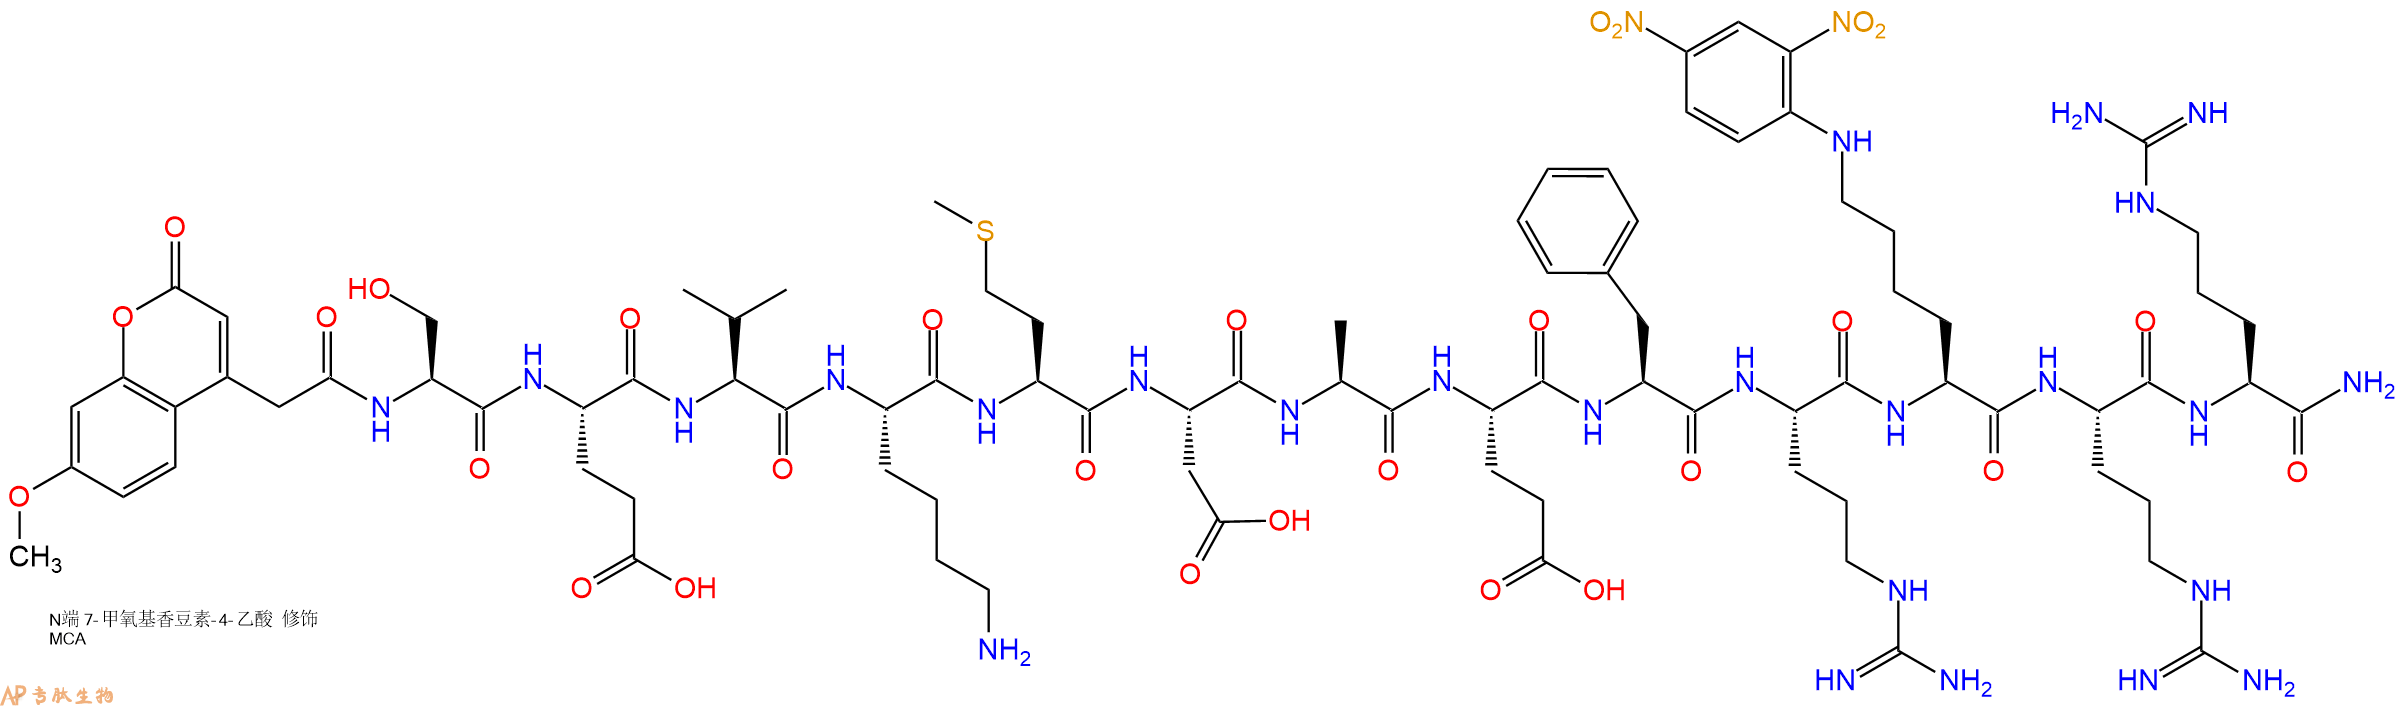 多肽生物产品Mca-Amyloid β/A4 Protein Precursor₇₇₀ (667-676)-Ly1802078-33-6